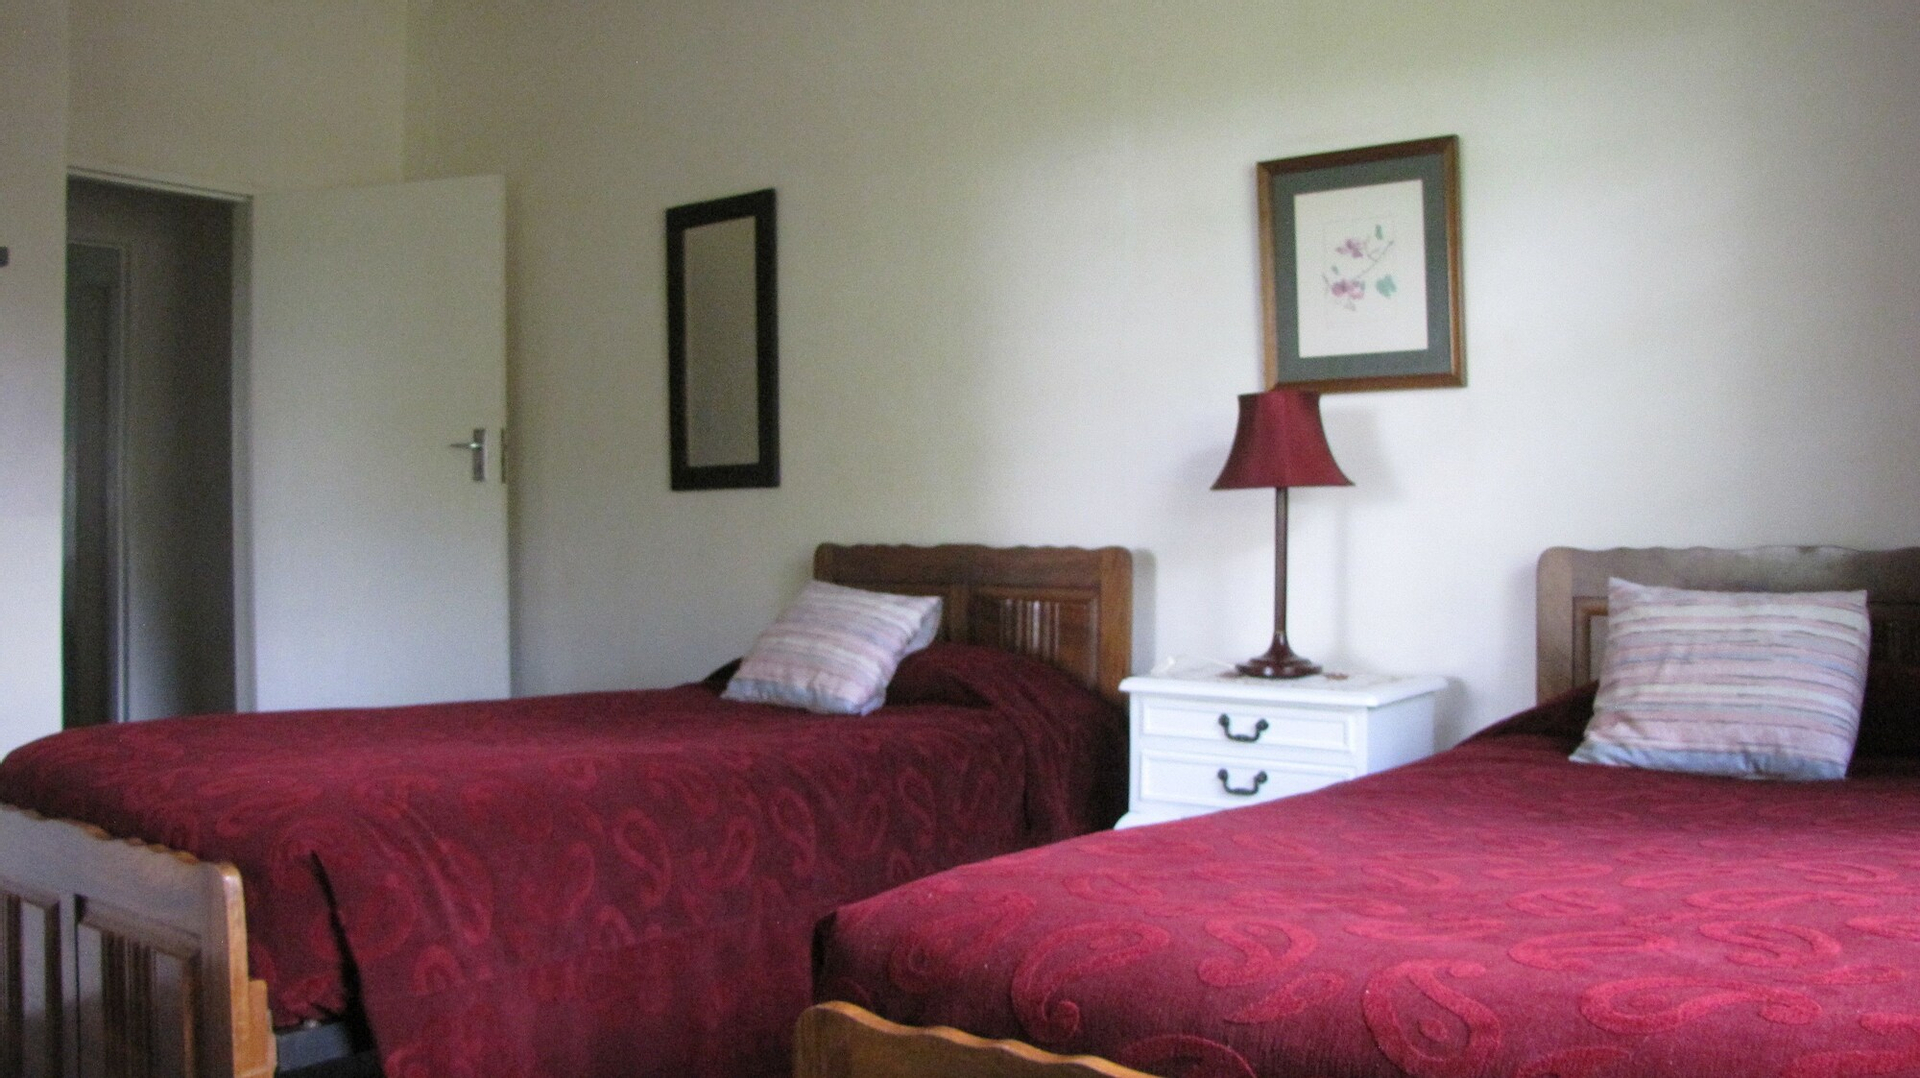 Room 2, Norma Jeanes Lake View Resort, Masvingo